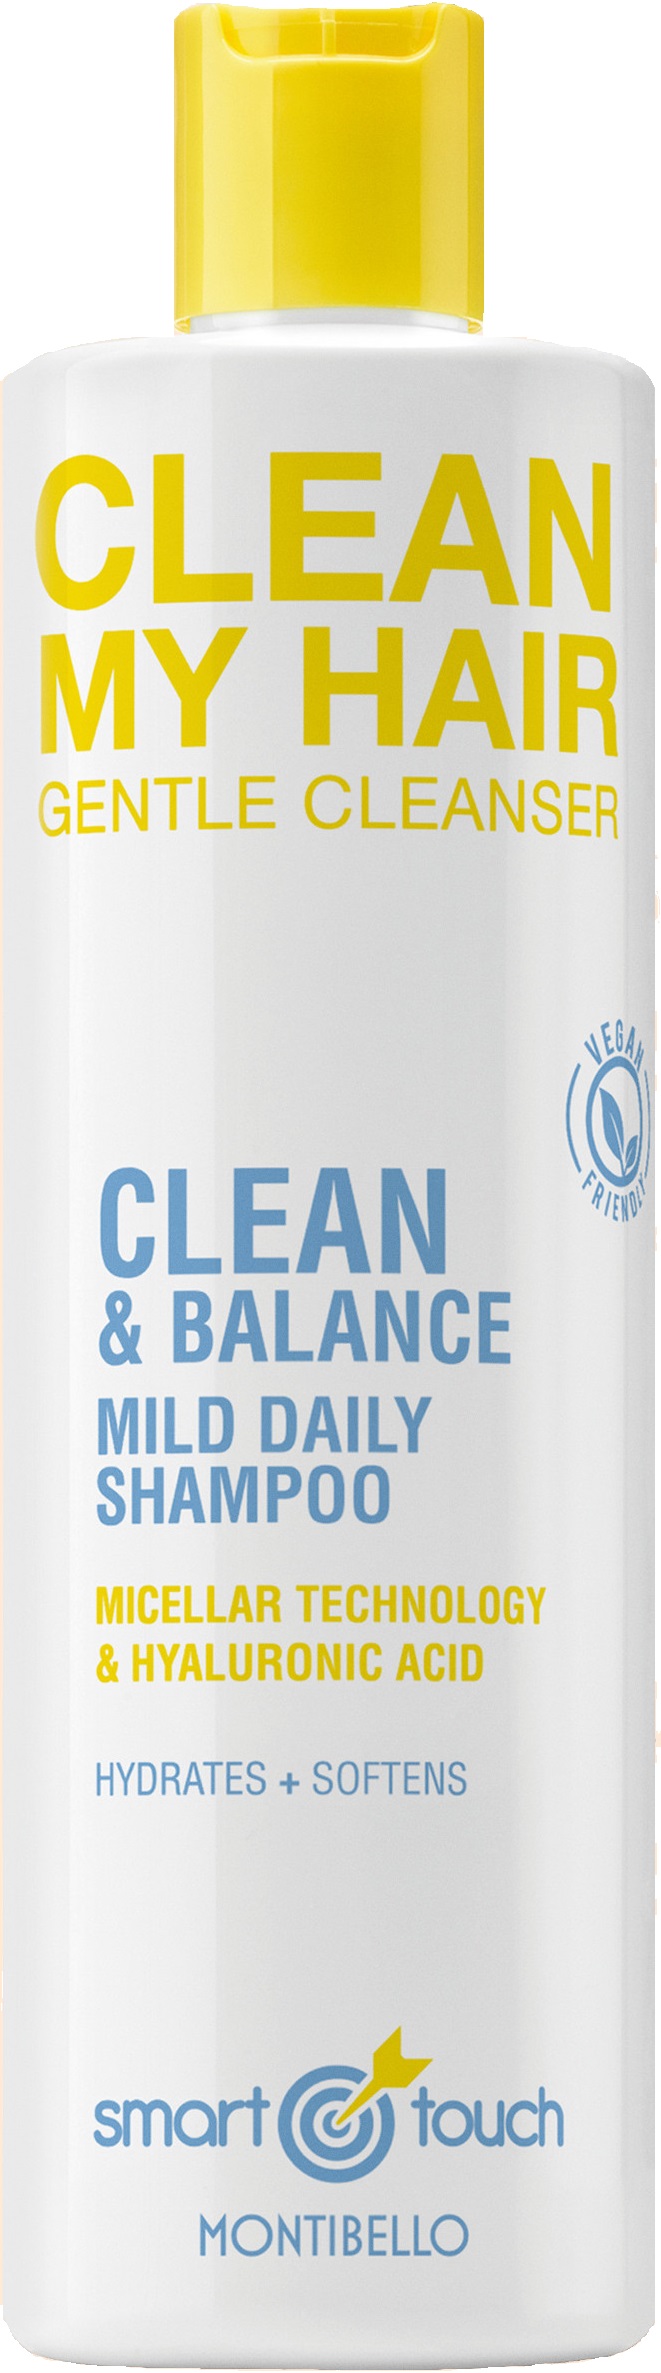 Underholde Glimte dejligt at møde dig Montibello Smart Touch Clean My Hair Shampoo 300 ml | lyko.com